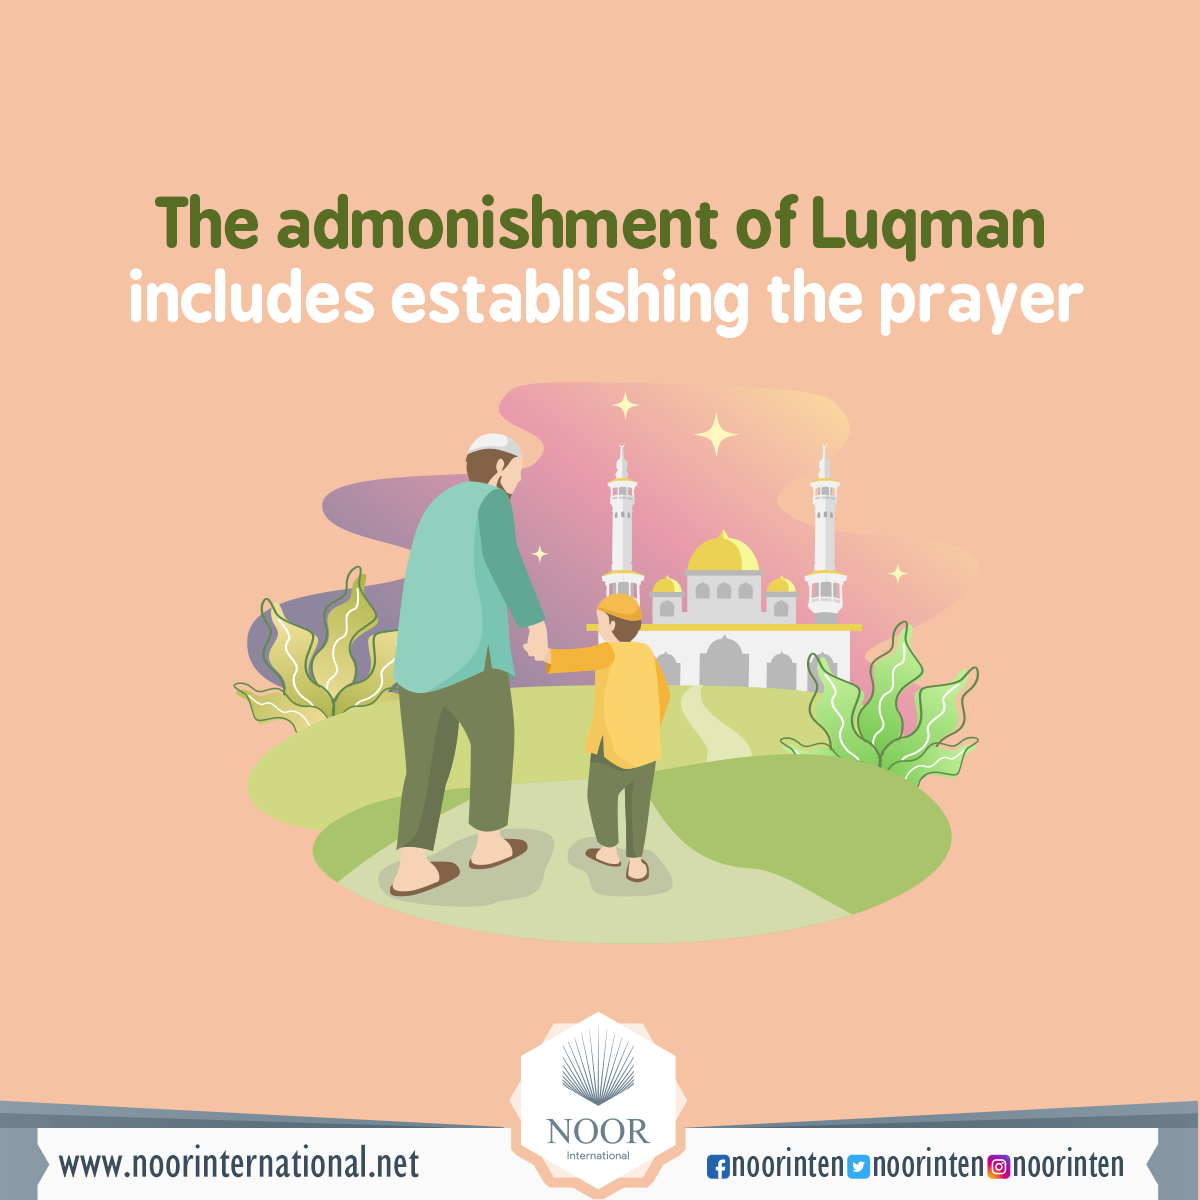 The admonishment of Luqman includes establishing the prayer